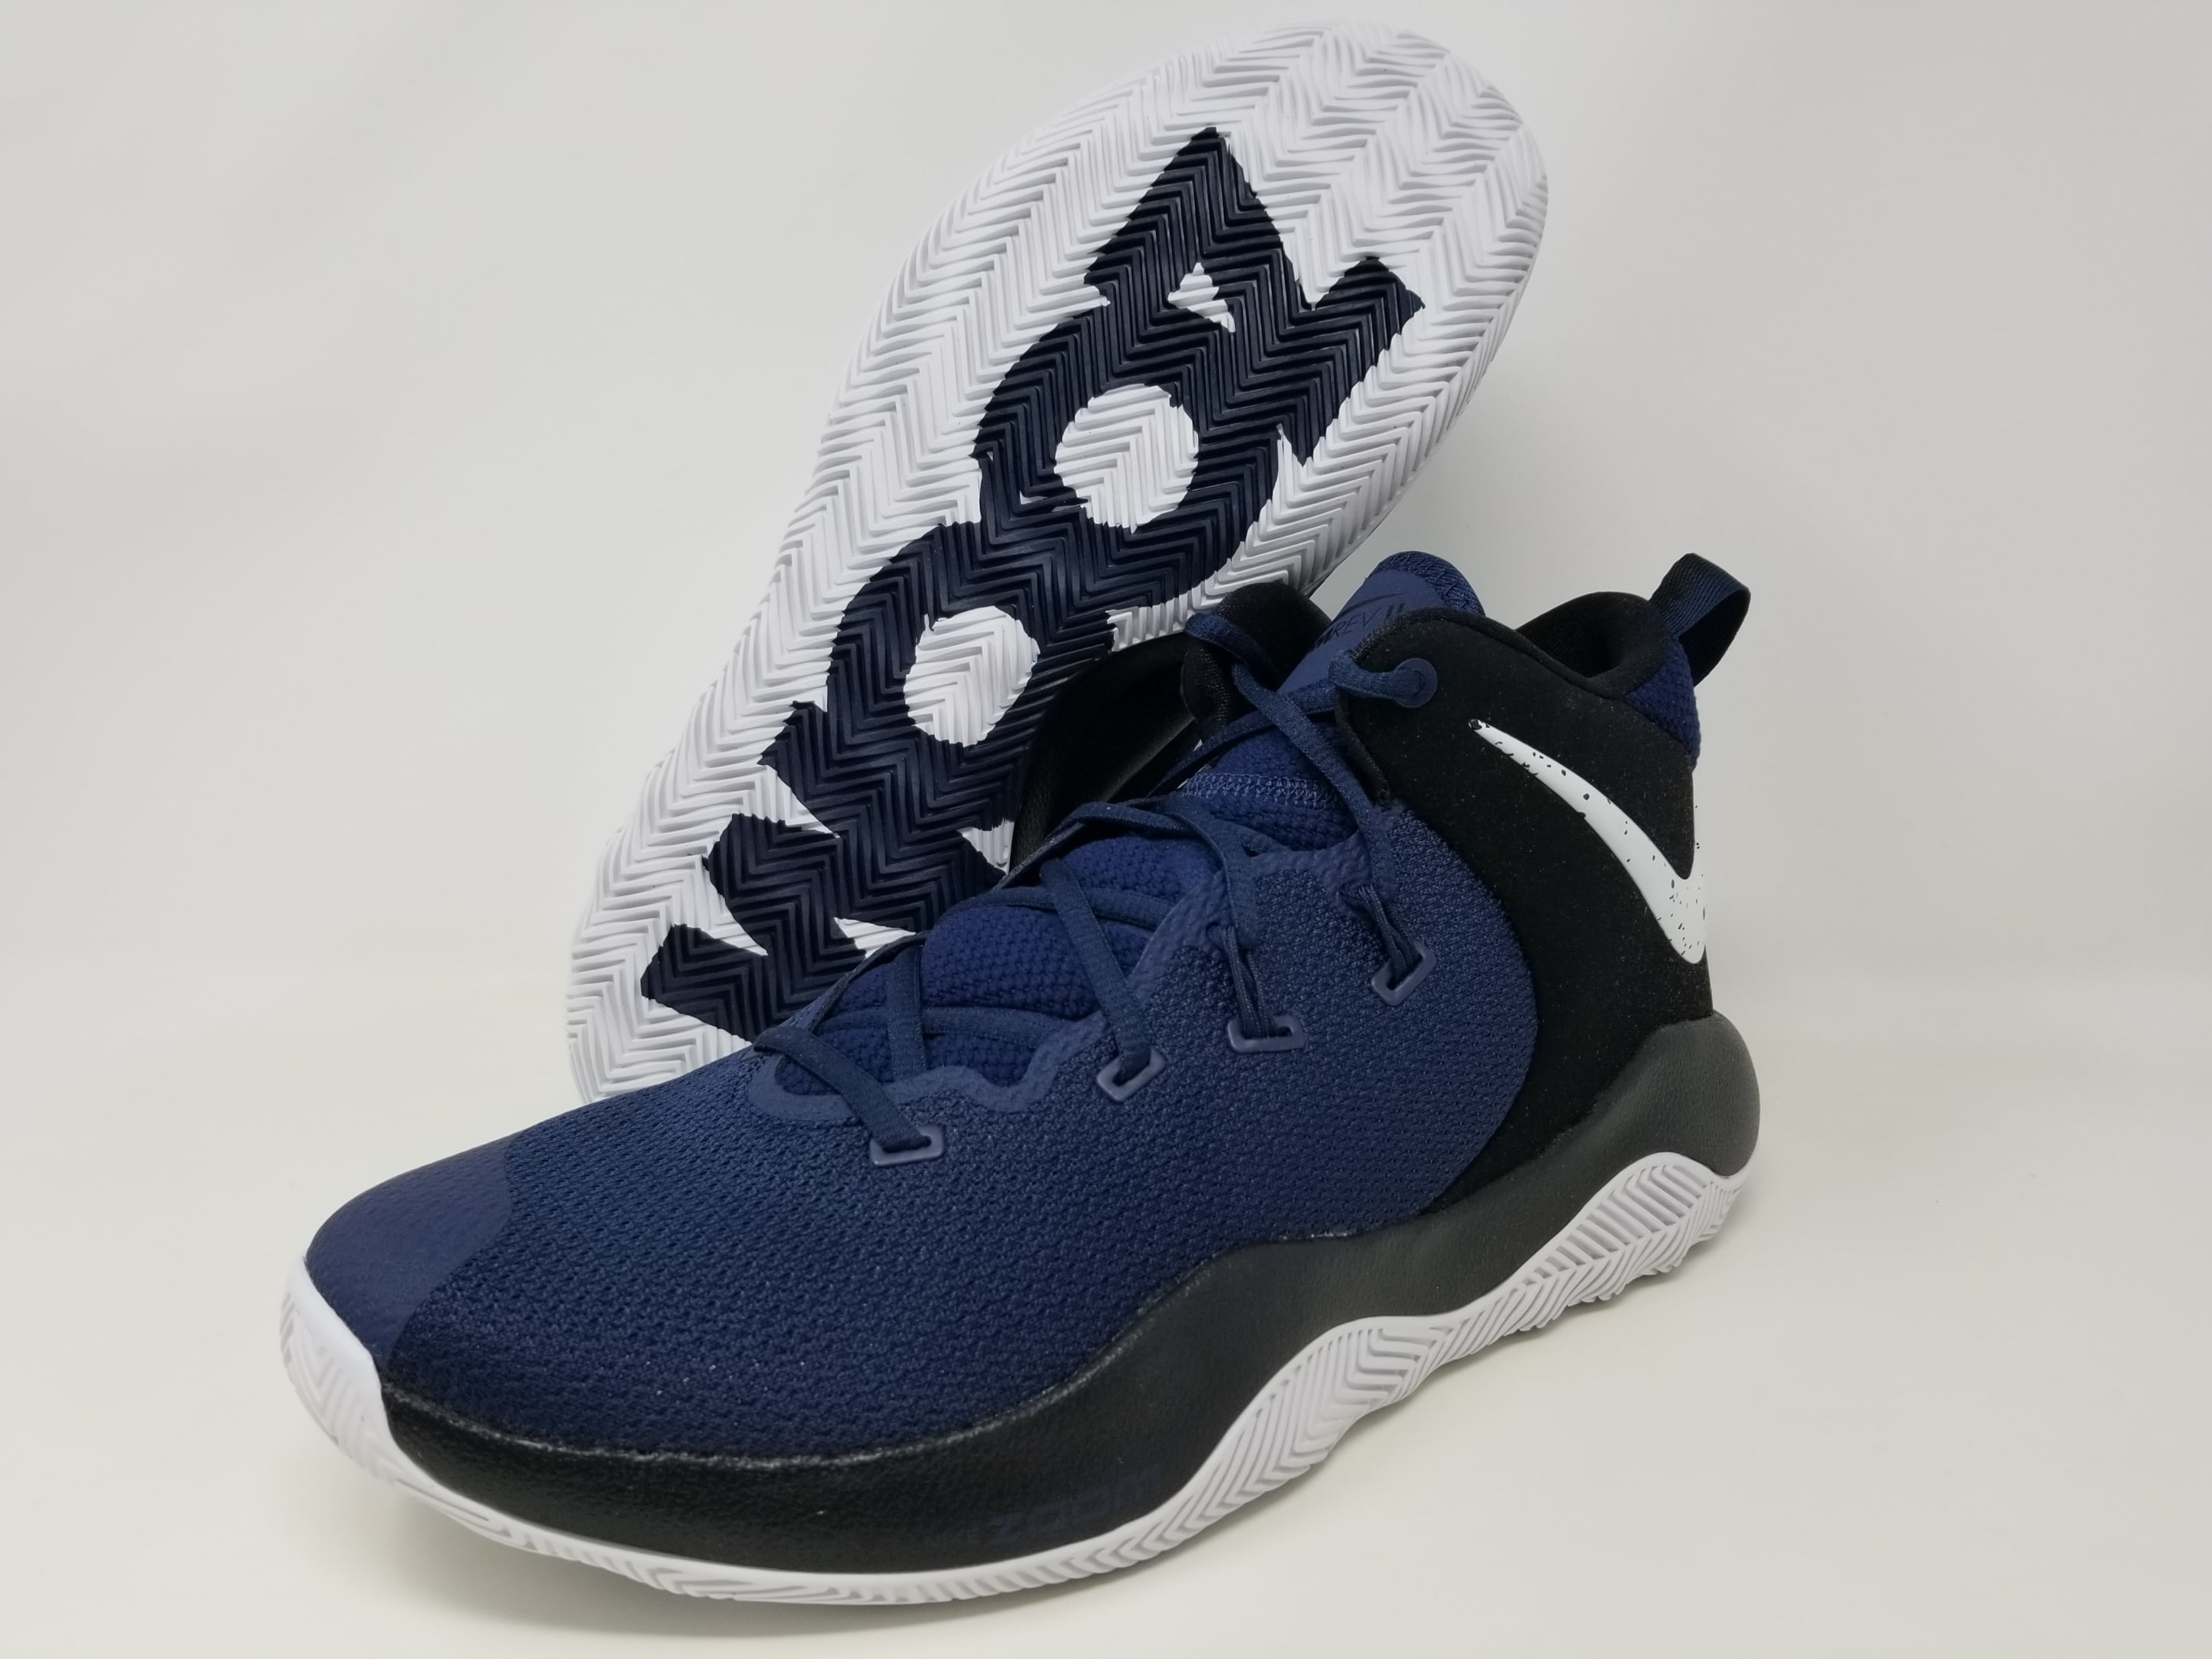 Nike Men's Zoom Rev II TB Basketball Shoes, Navy/White/Black, 10 D(M ...